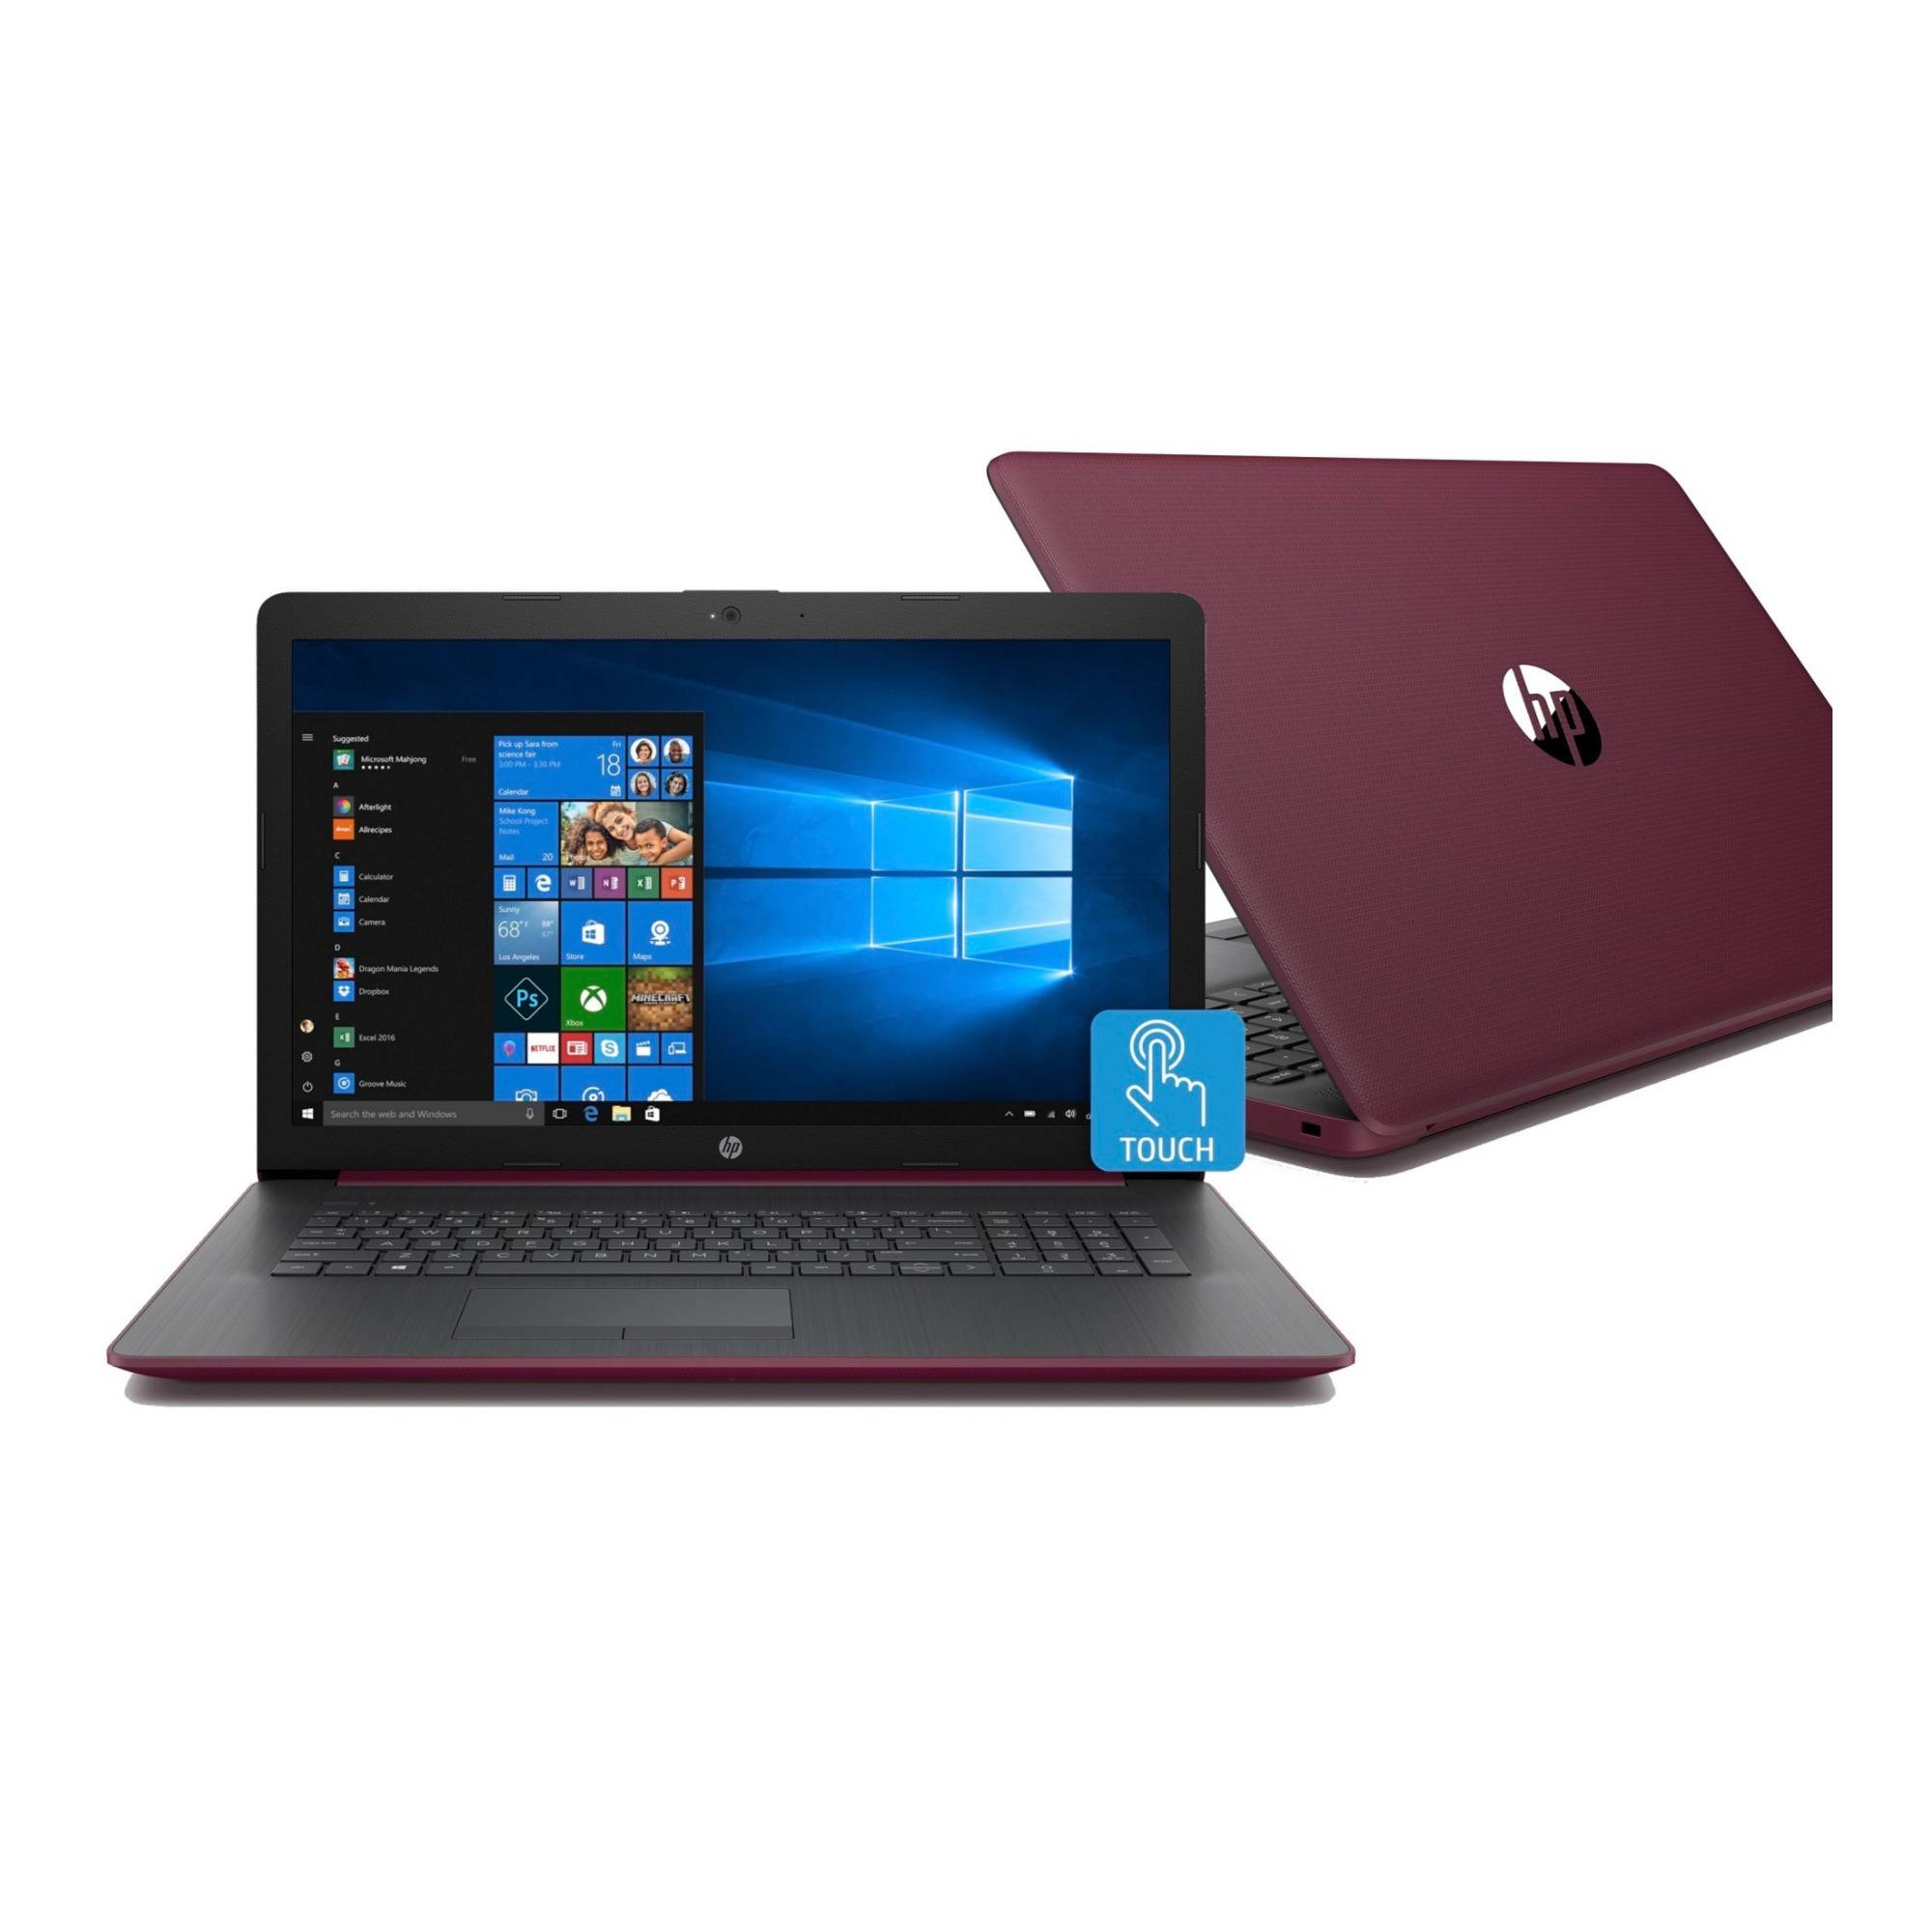 HP 17-CA0012 AMD Ryzen 3 2300U Quad-Core 8GB 1TB HDD 17.3-inch WLED Touch Screen Laptop Microsoft Office 365 Personal